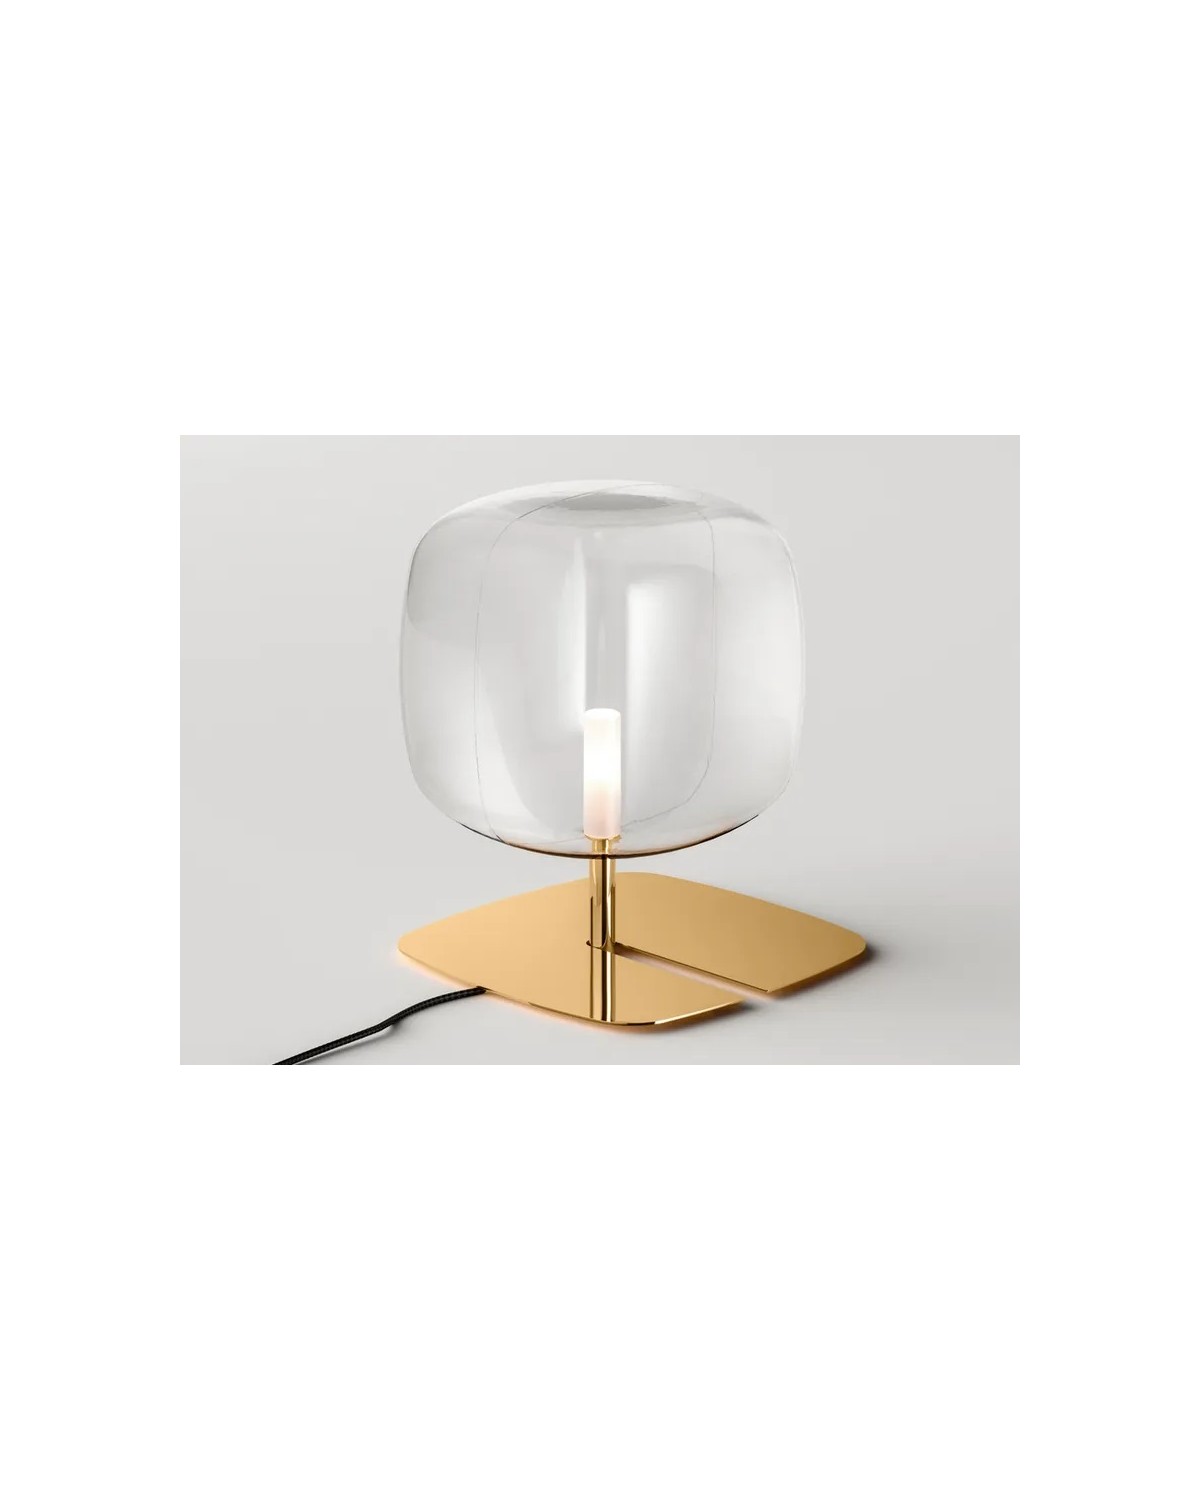 HYPERION G, Lampada da tavolo a LED dimmer in Pyrex® finitura oro lucido  mis. 30x30cm h34cm